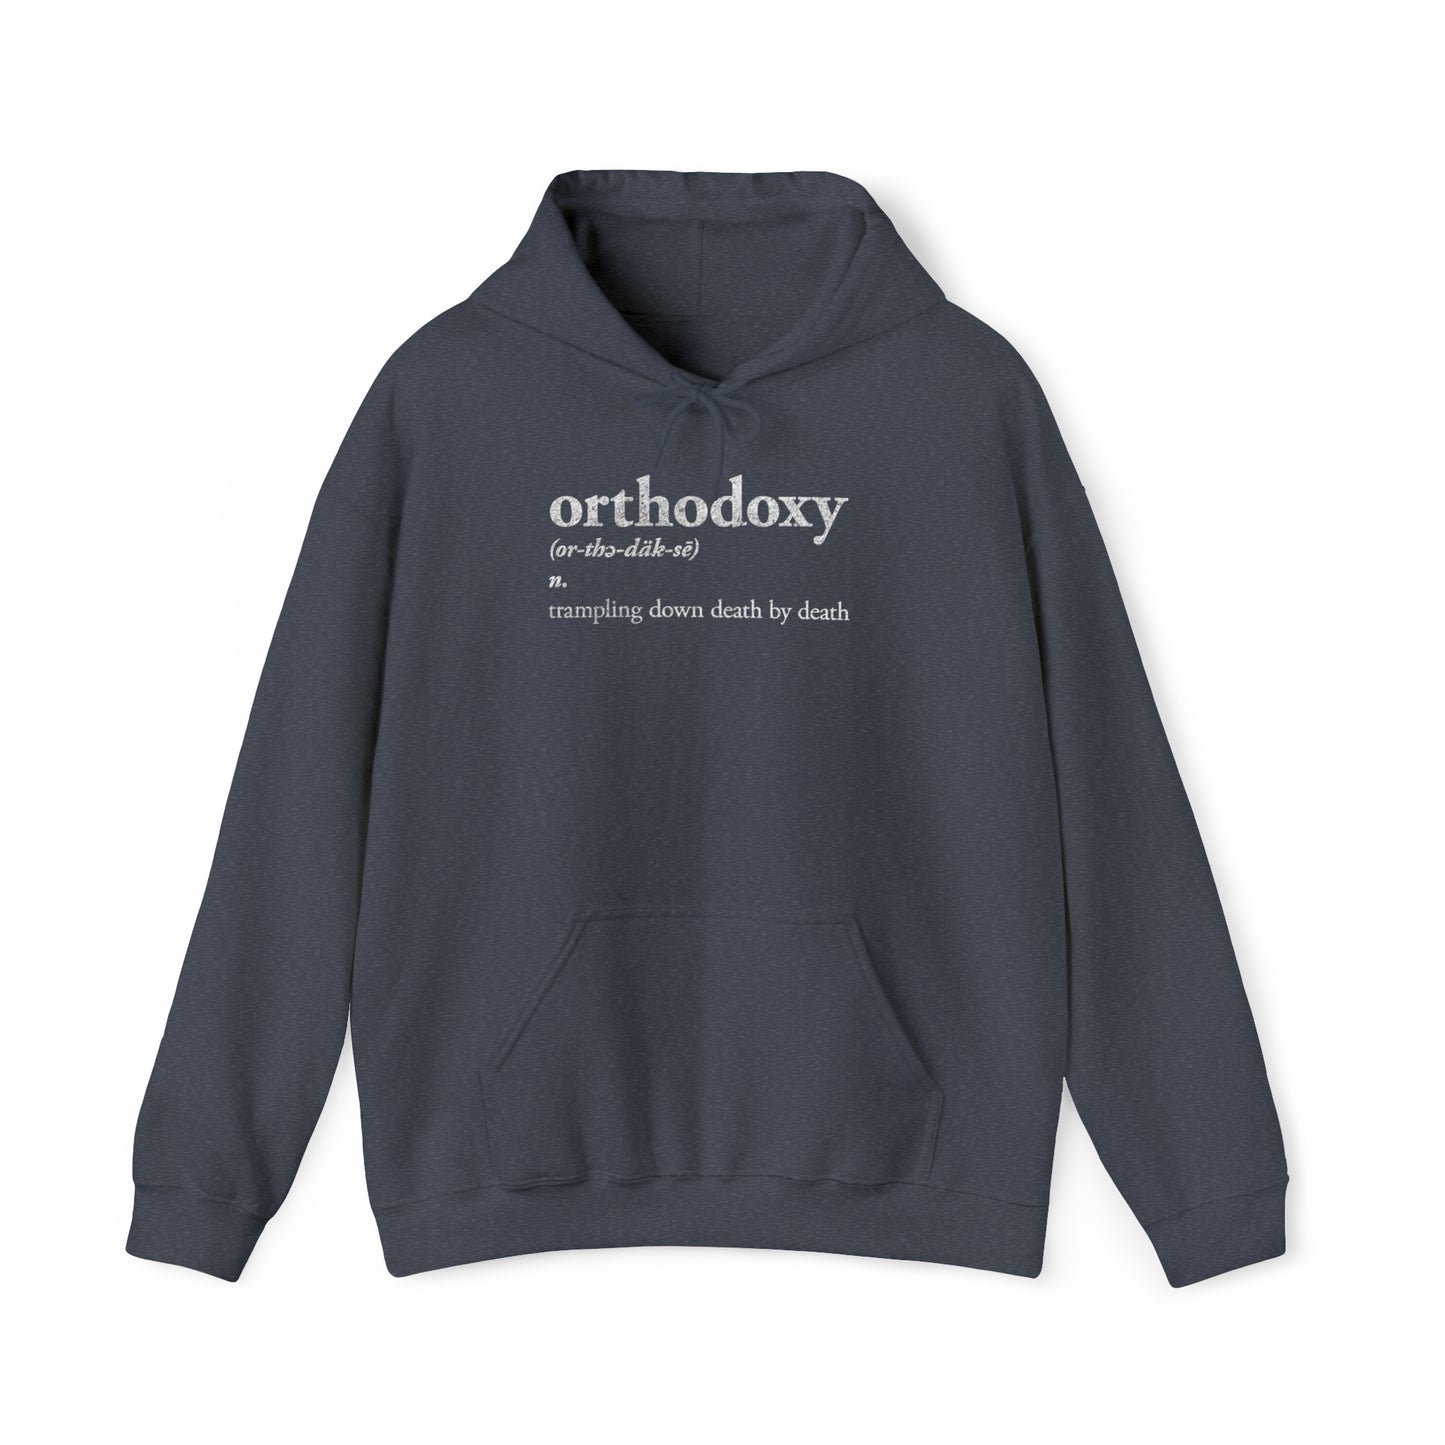 Orthodoxy Definition No. 1 (Trampling Down Death By Death)  | Orthodox Christian Hoodie / Hooded Sweatshirt